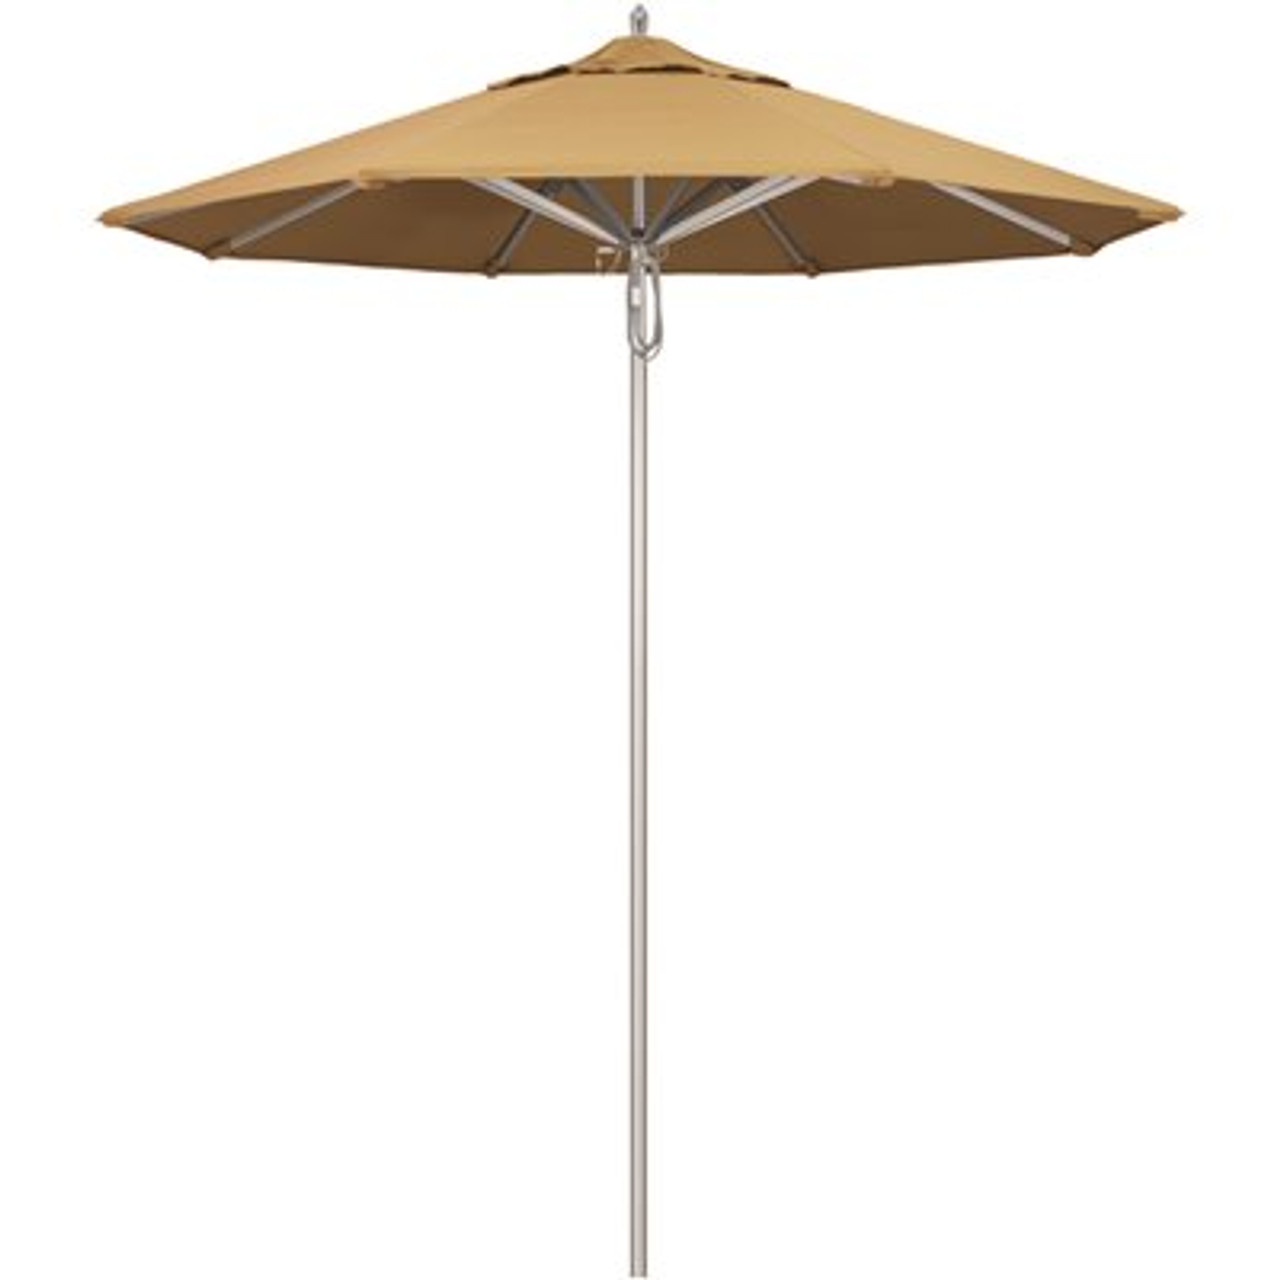 California Umbrella 7.5 ft. Silver Aluminum Commercial Market Patio Umbrella with Pulley Lift in Wheat Sunbrella